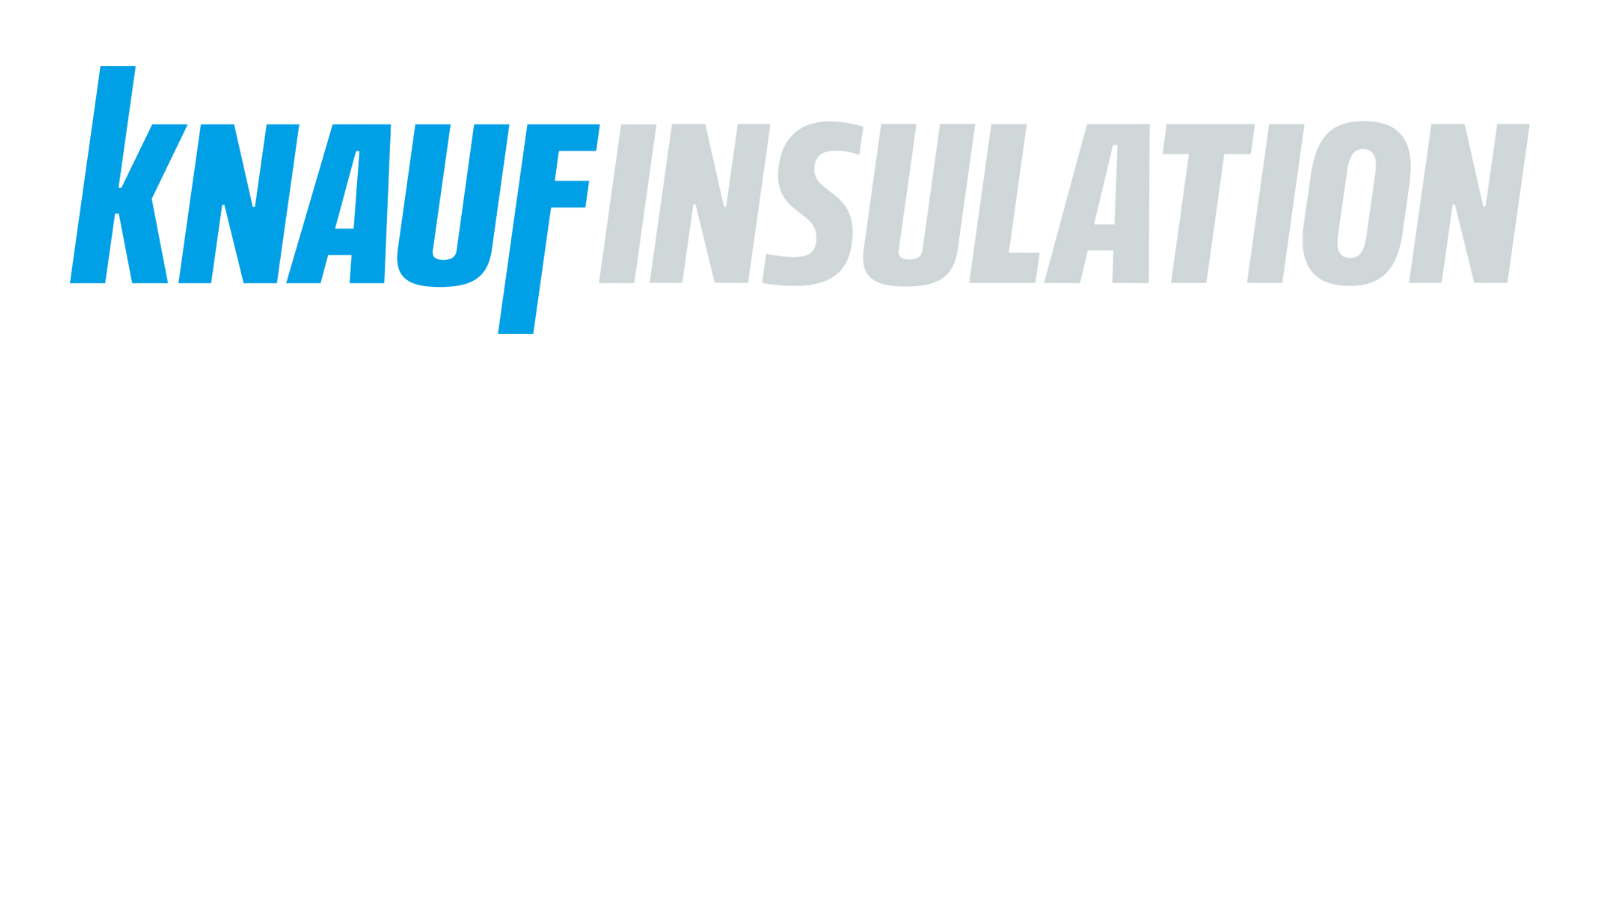 KNAUF INSULATION HOLDING GmbH